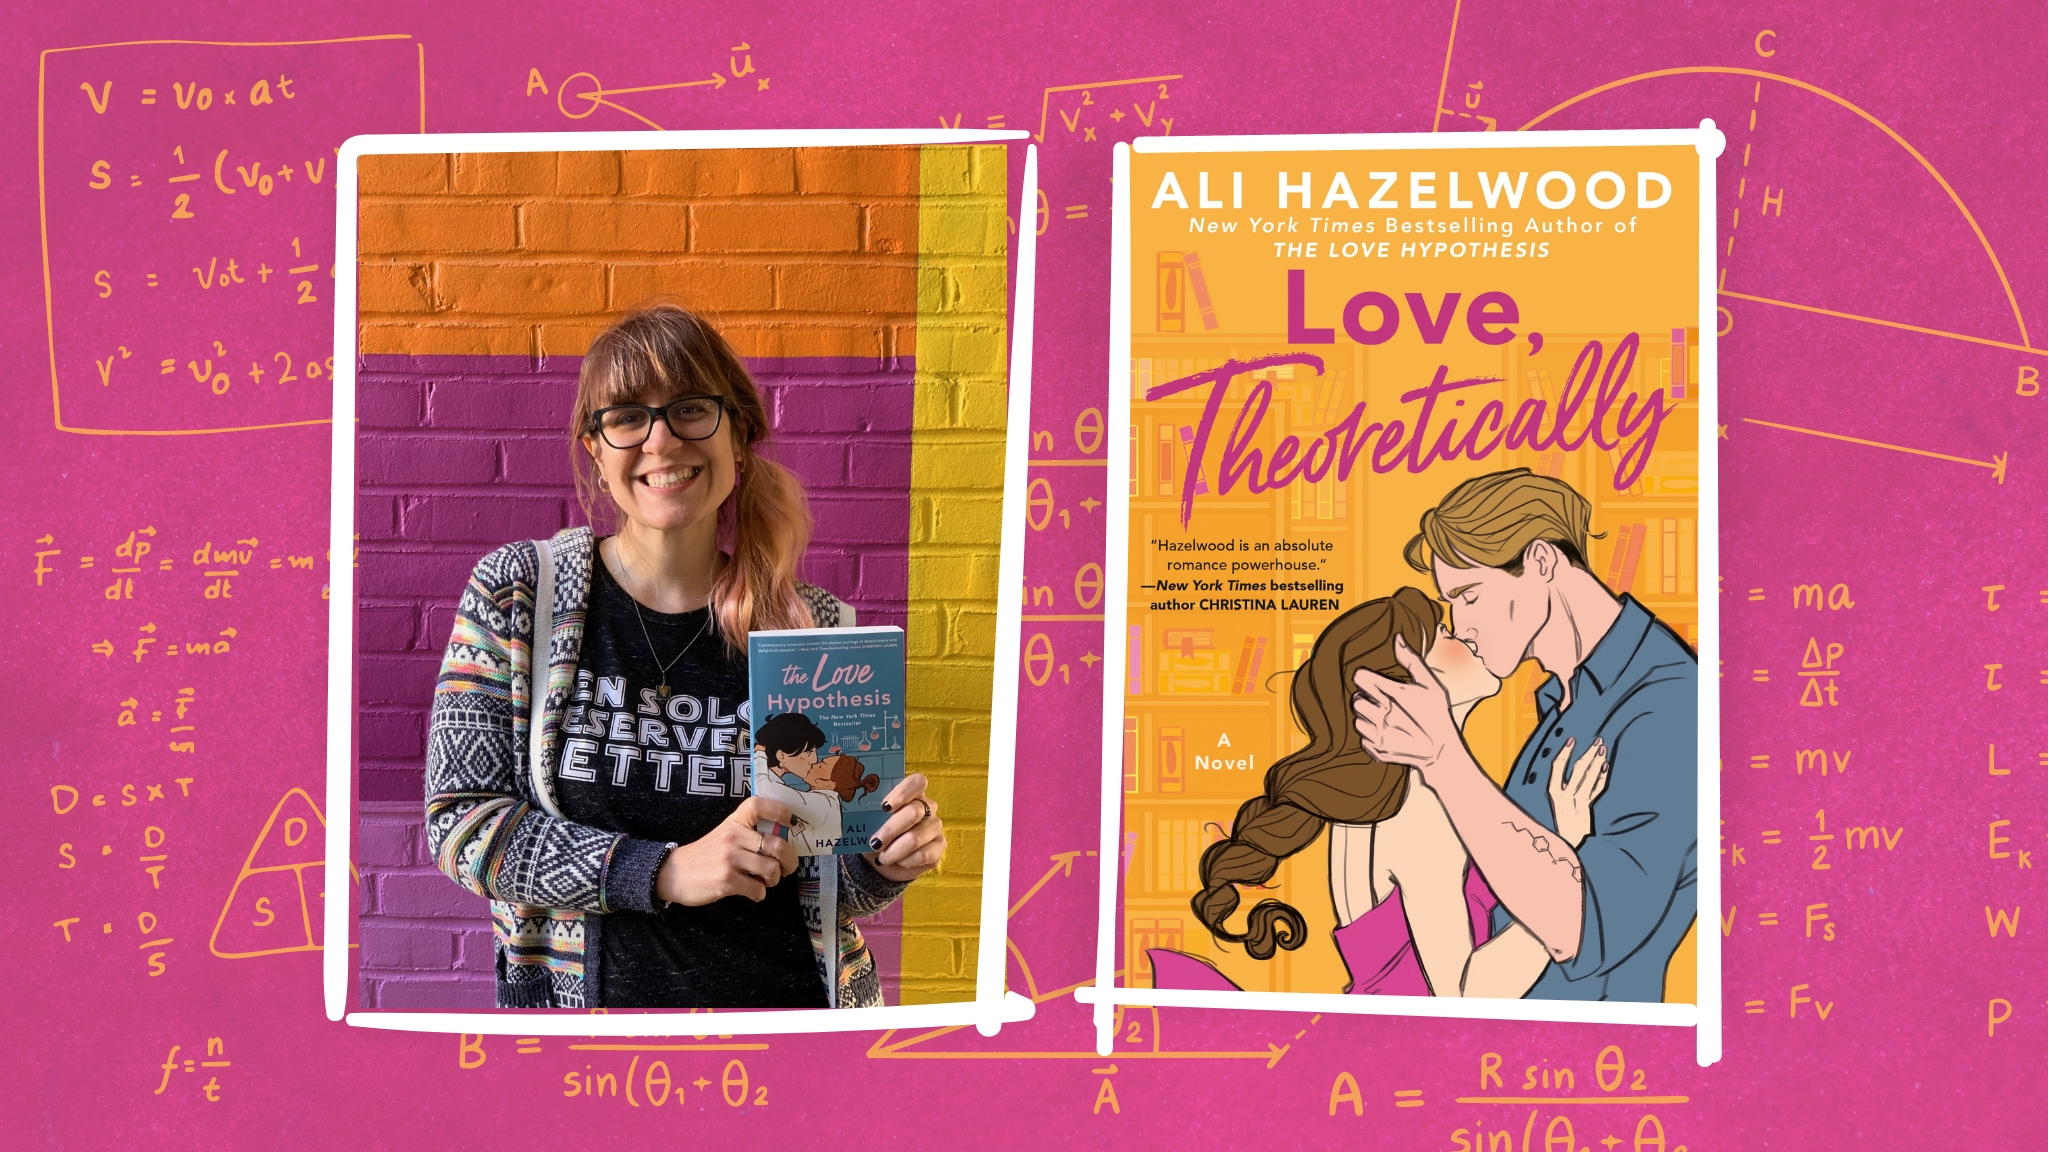 Love, Theoretically by Hazelwood, Ali